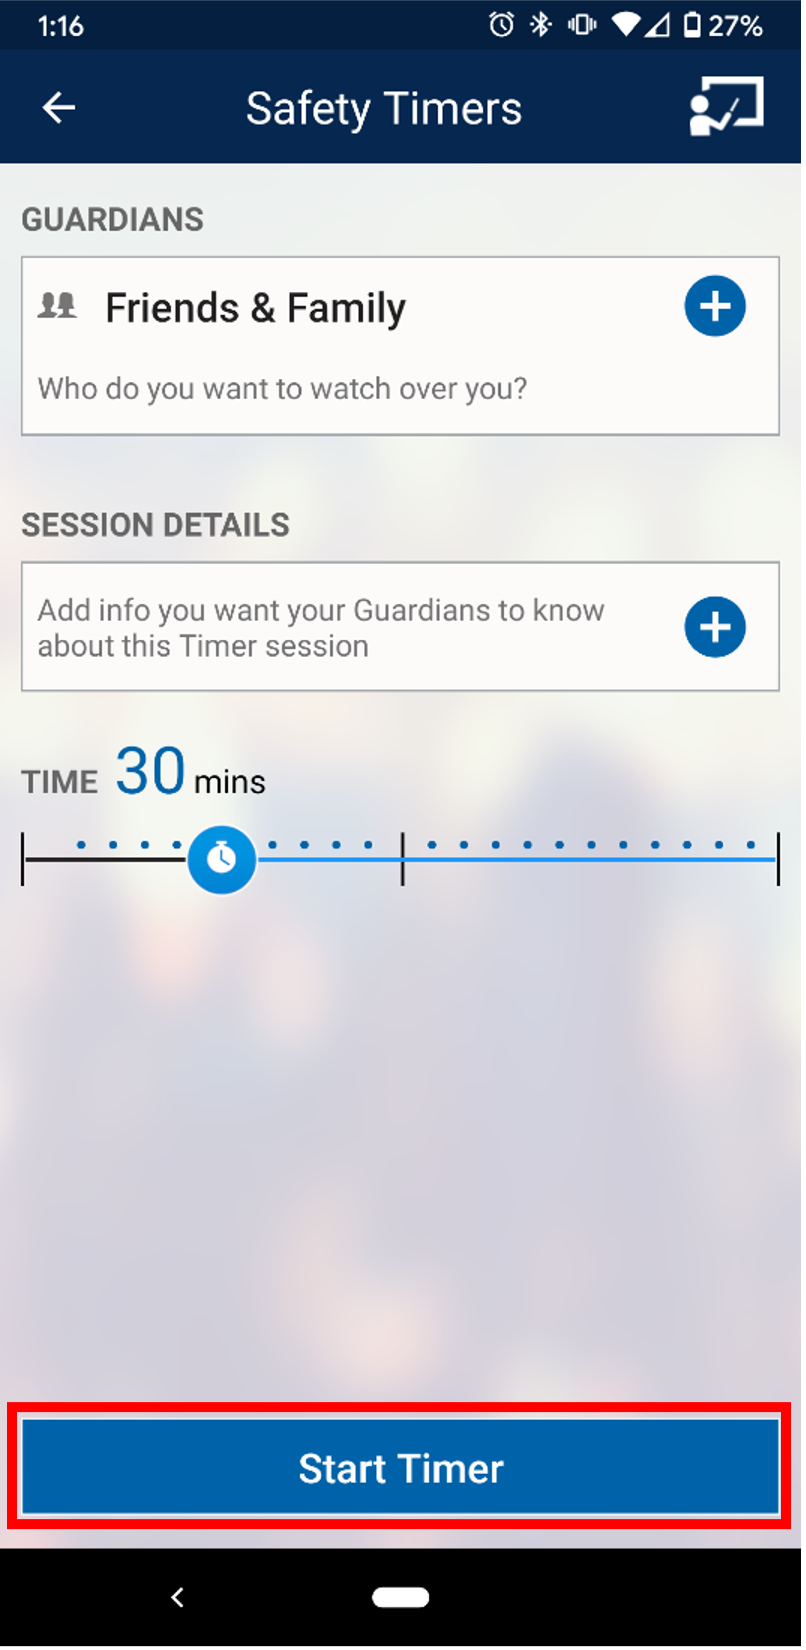 Guardian app start safety timer 